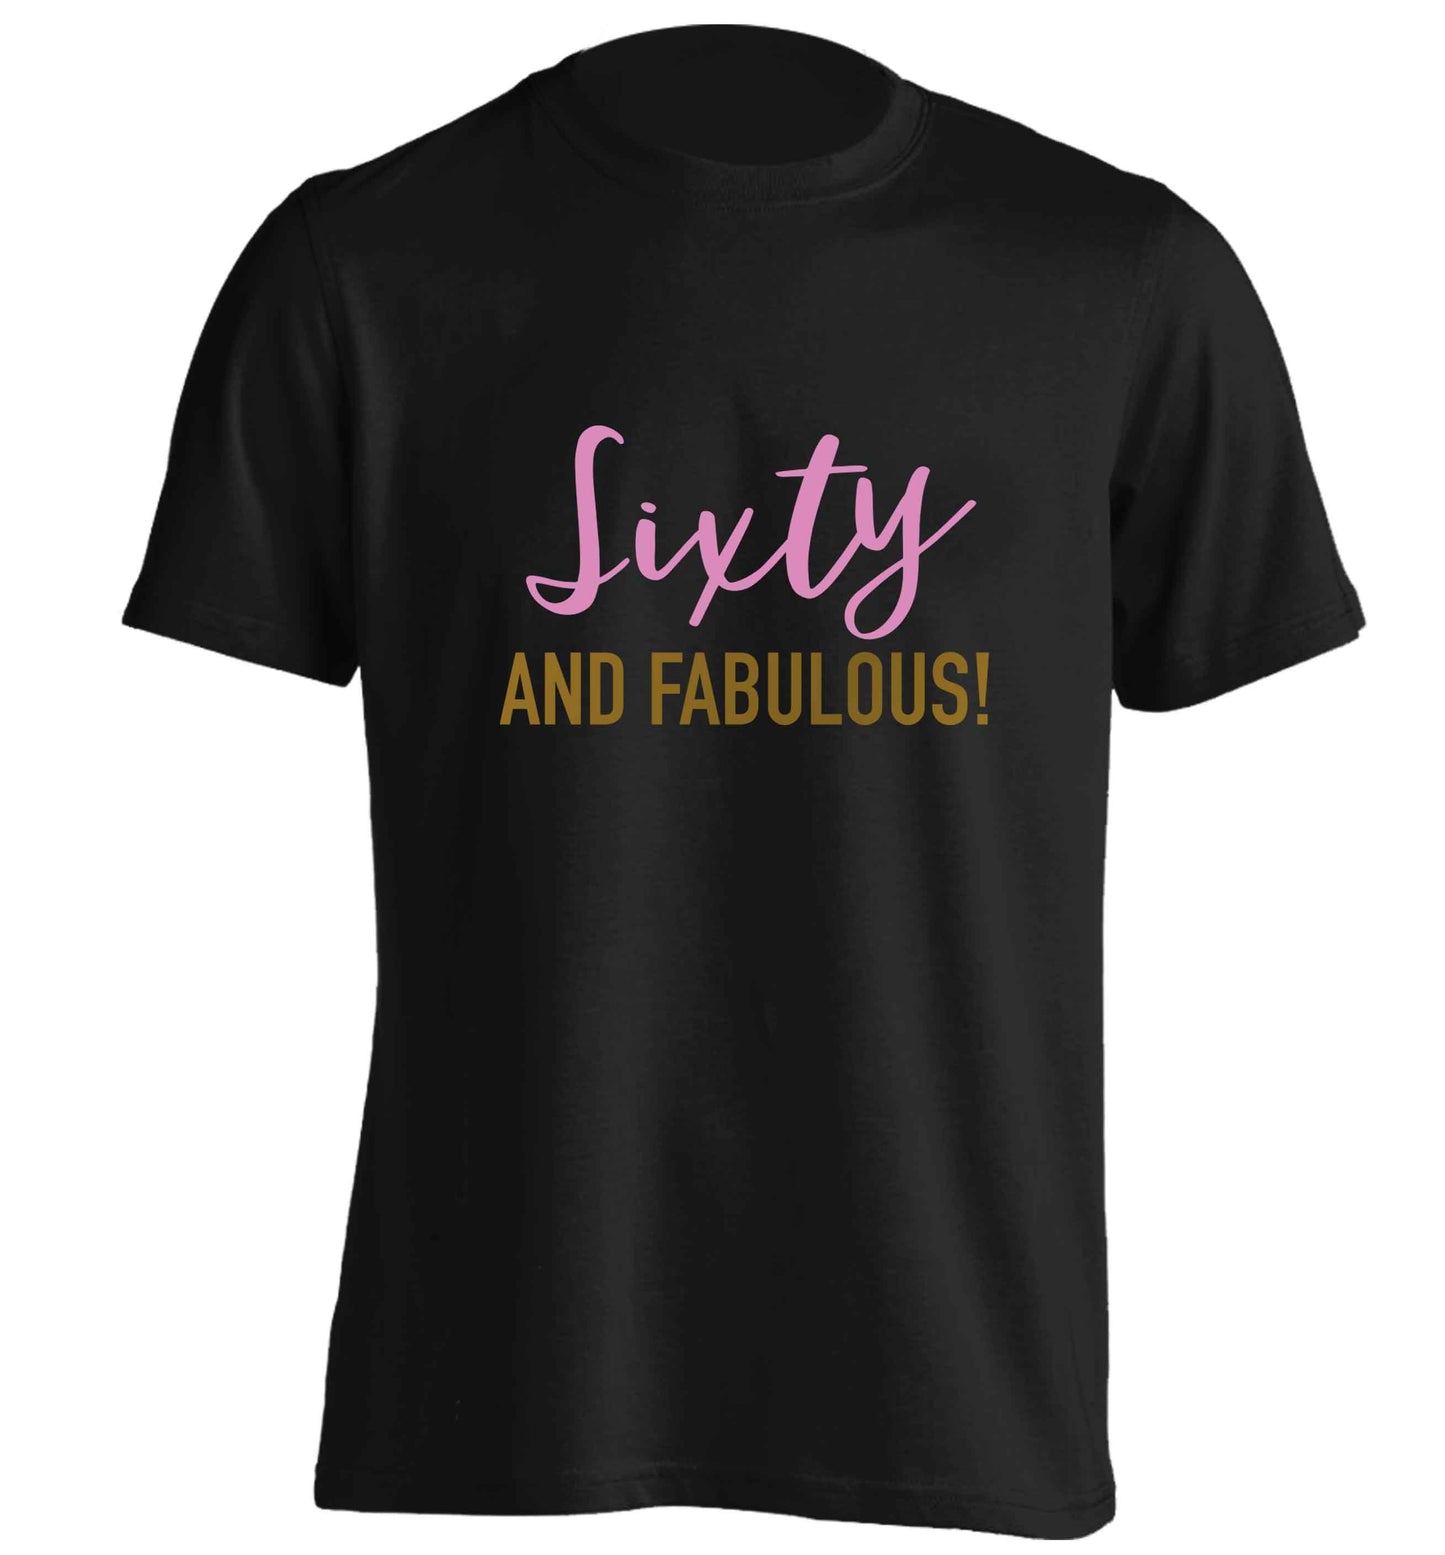 Sixty and fabulous adults unisex black Tshirt 2XL